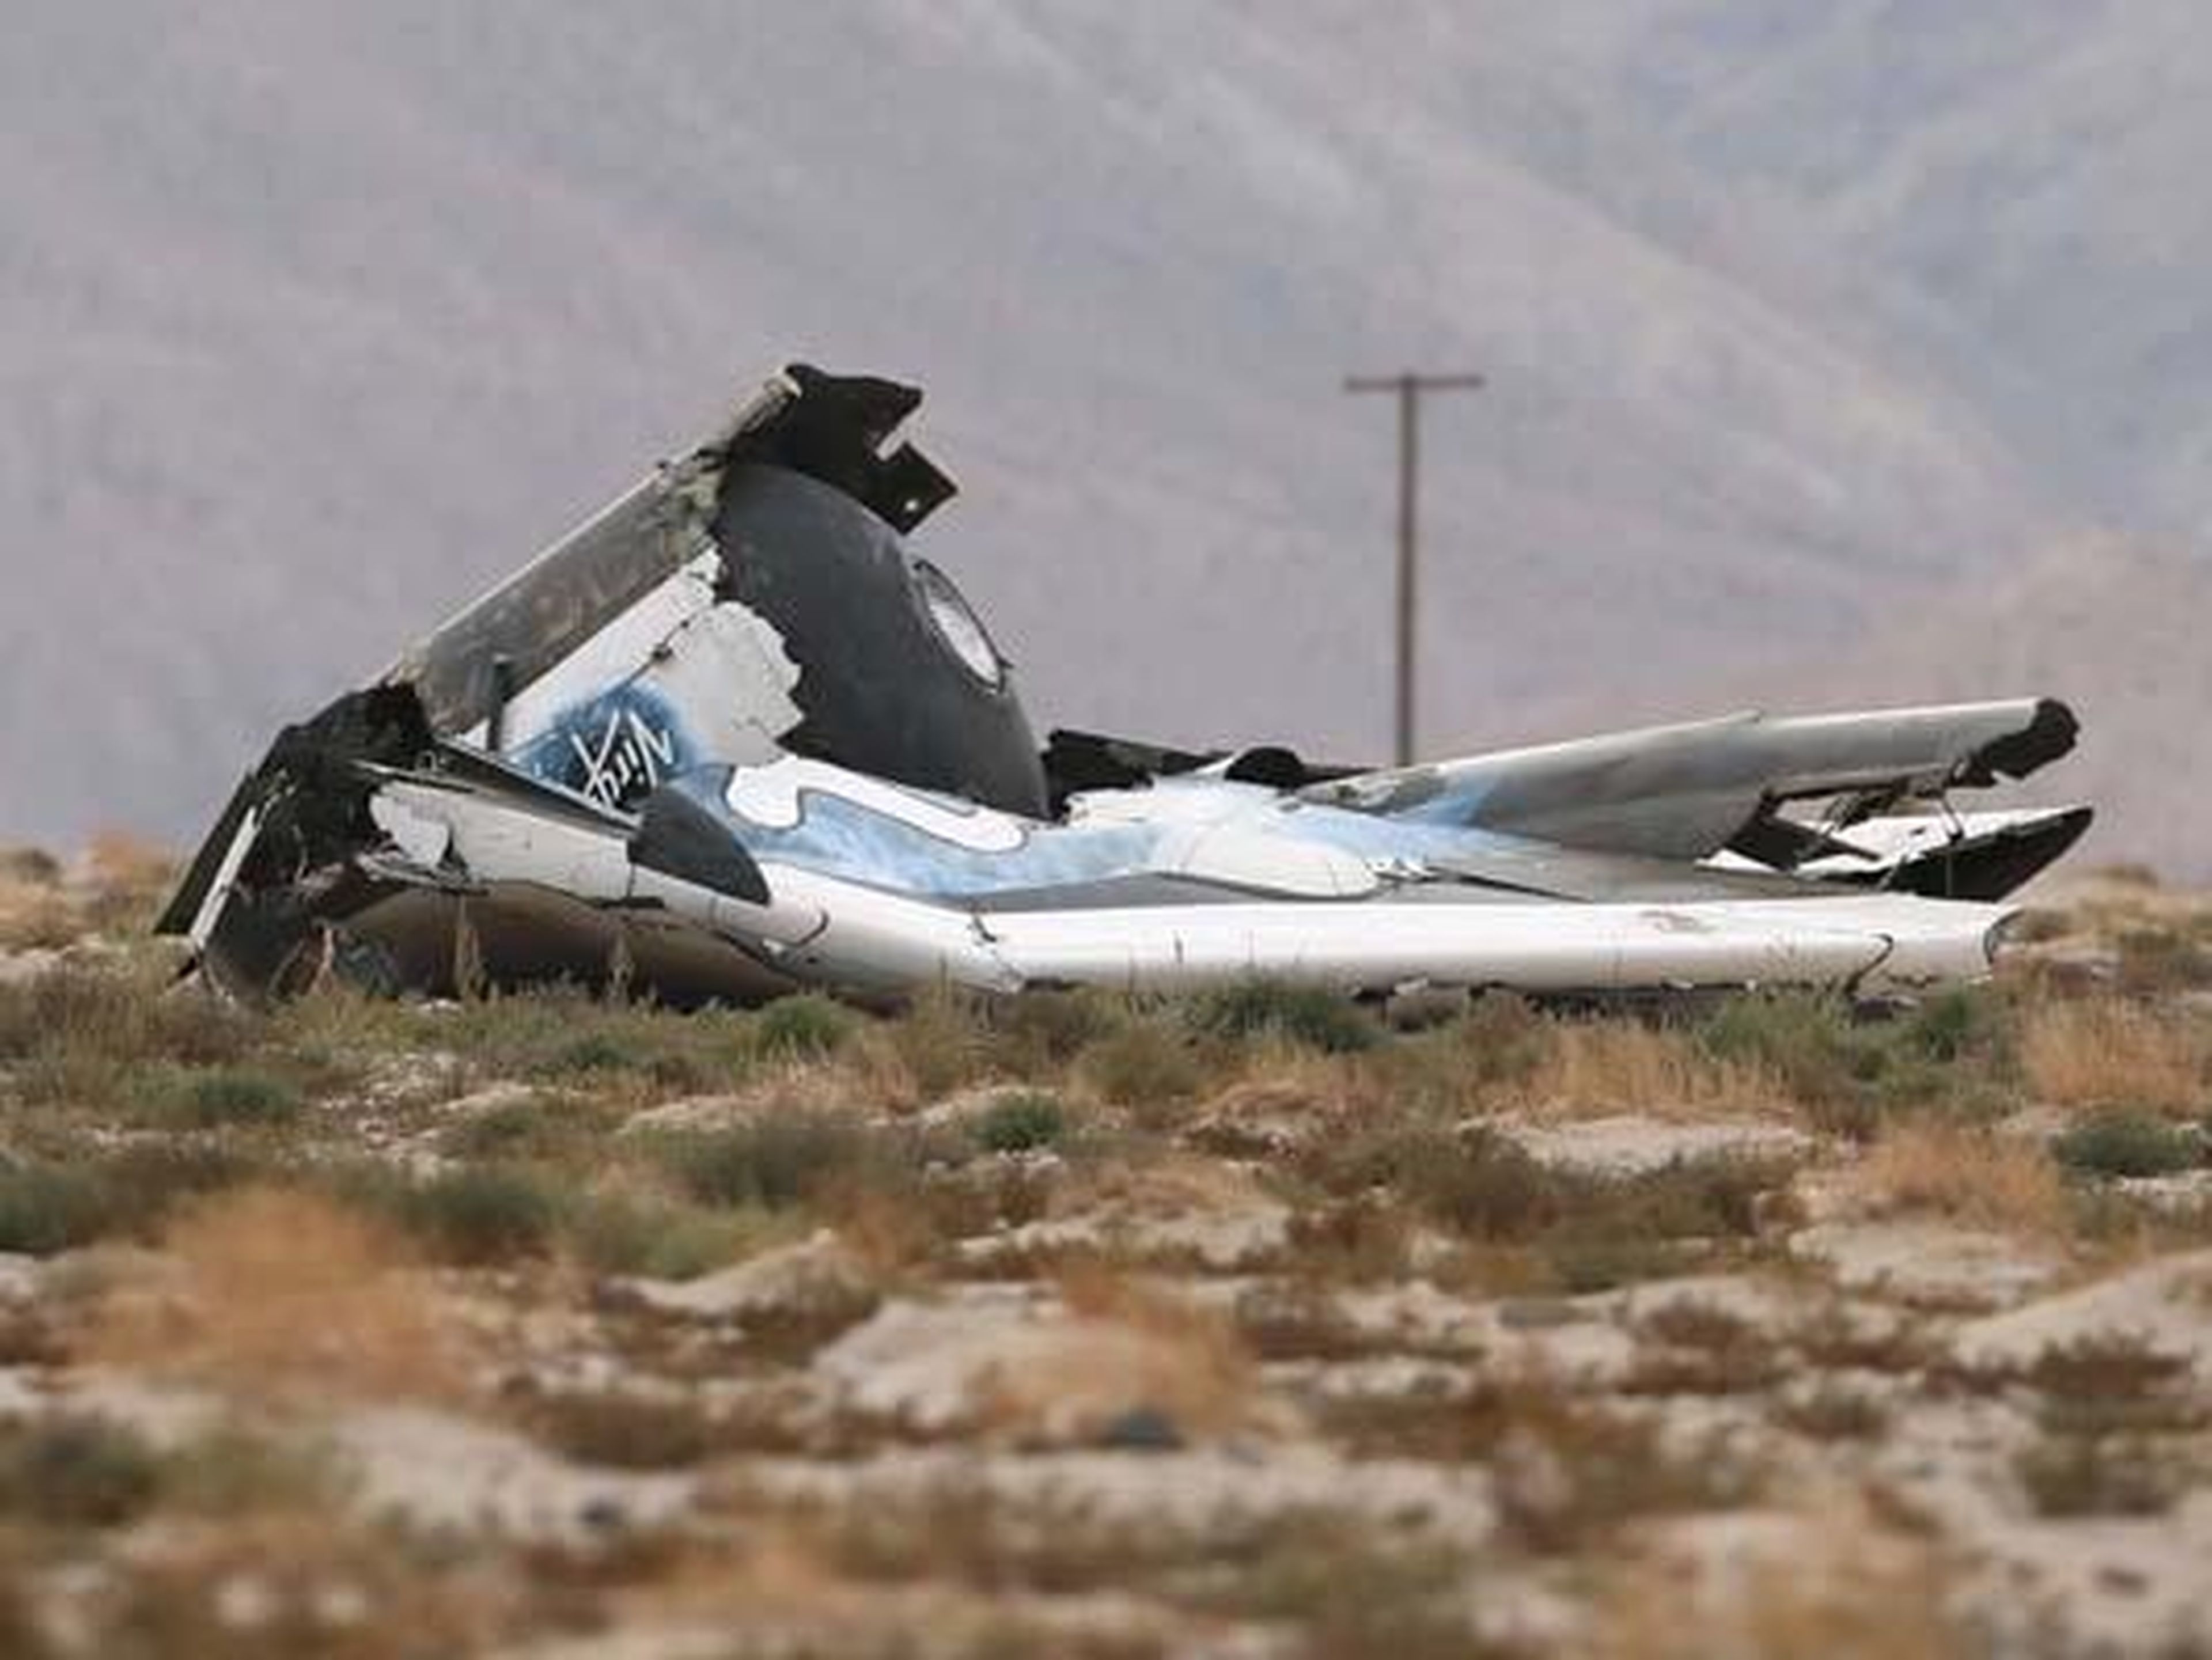 Virgin Galactic SpaceShipTwo flight test crash in 2014.